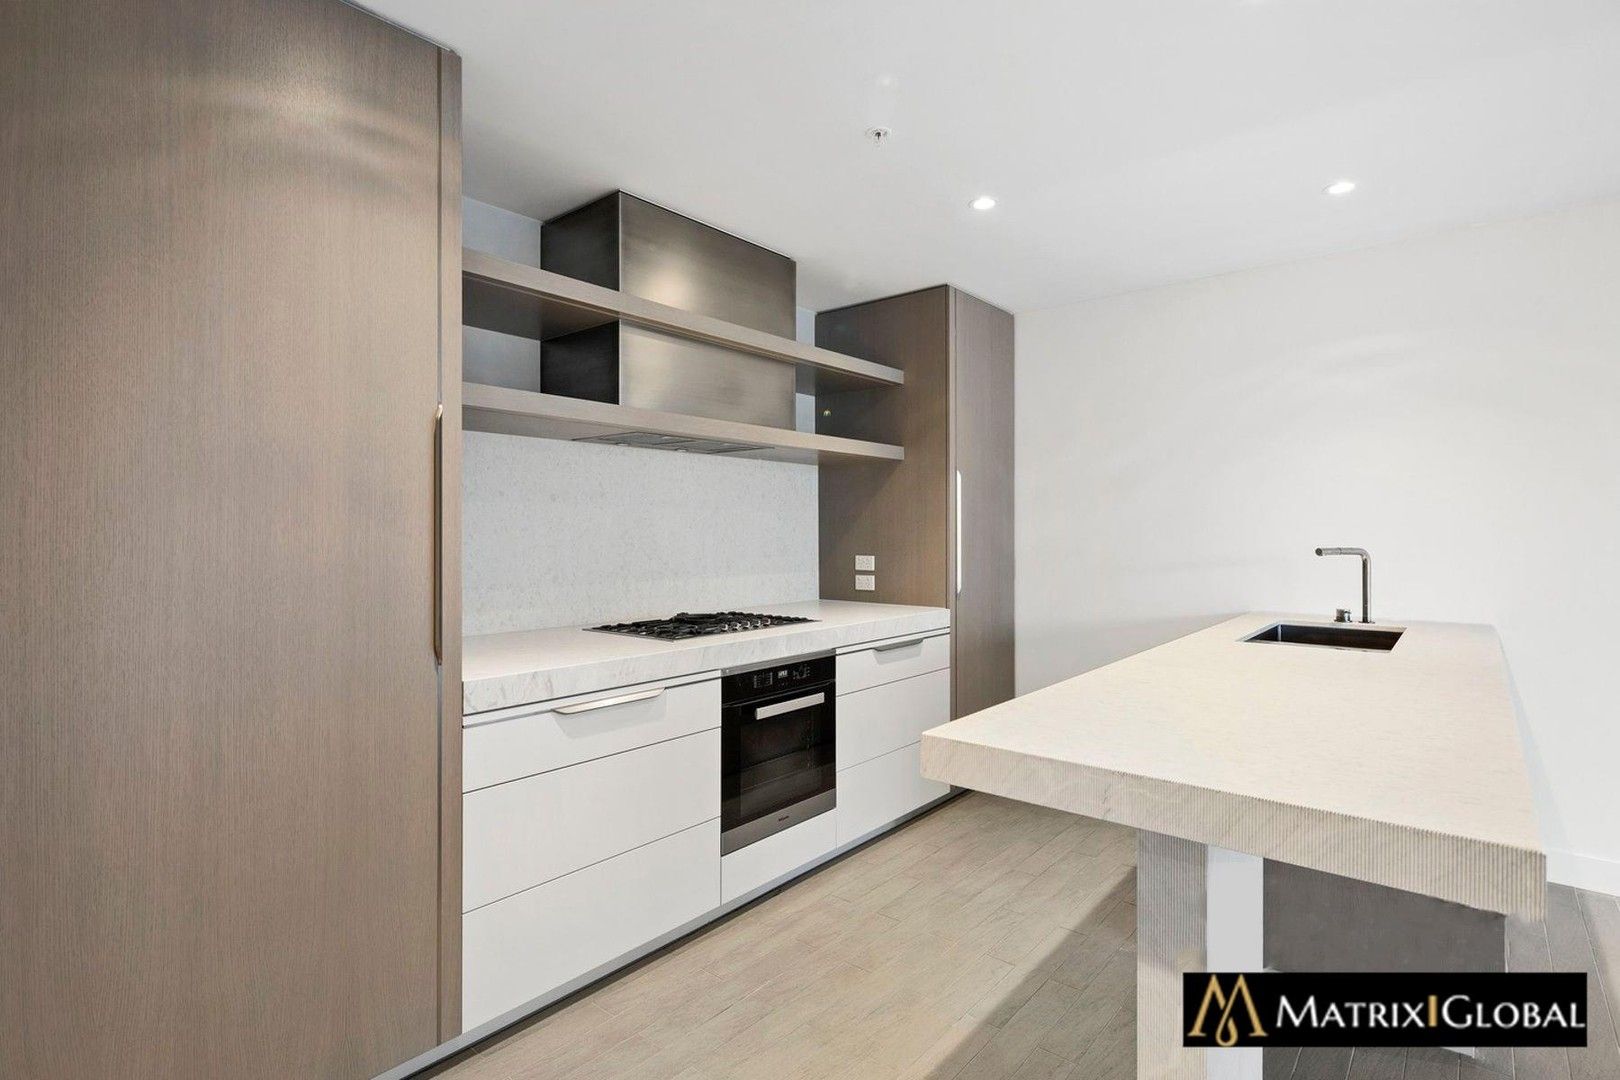 2 bedrooms Apartment / Unit / Flat in 204/280 Albert Street EAST MELBOURNE VIC, 3002